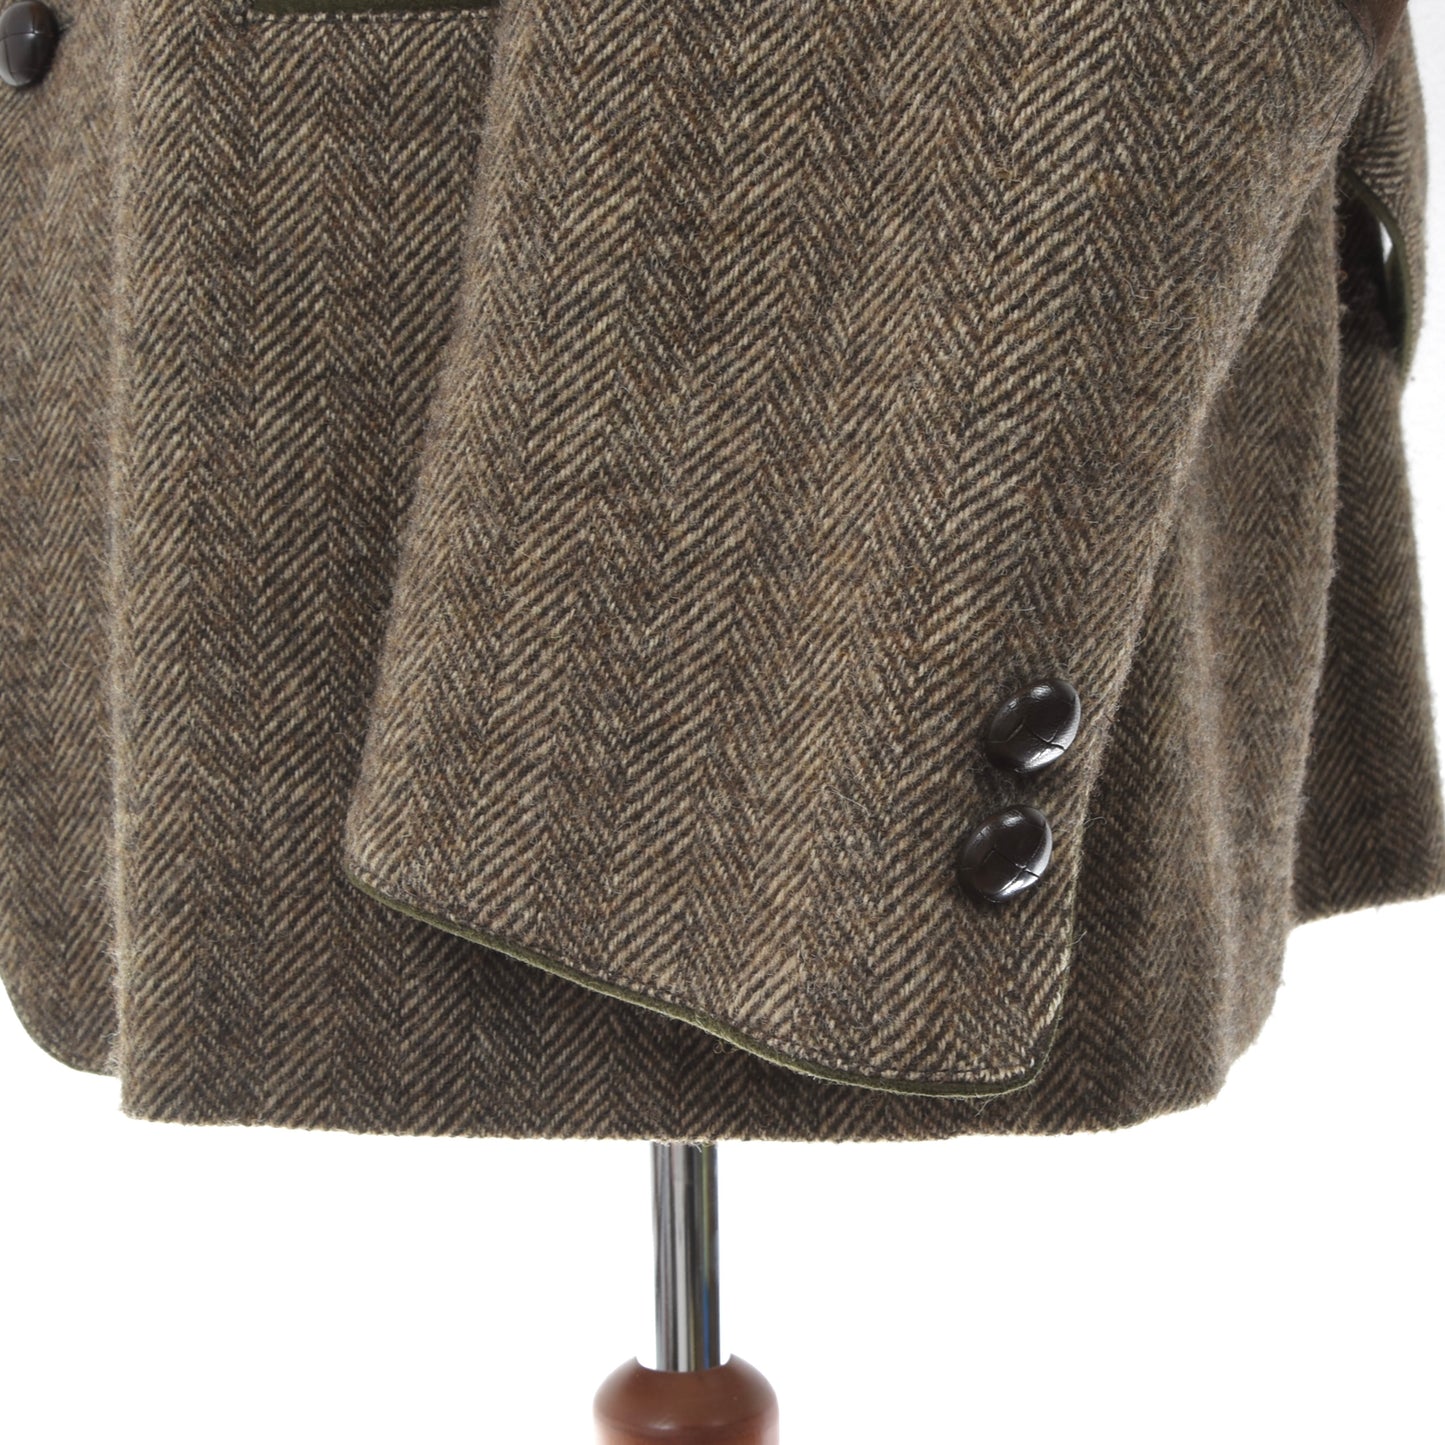 Schneiders Salzburg 100% Wool Tweed Janker/Jacket Size 54 - Brown